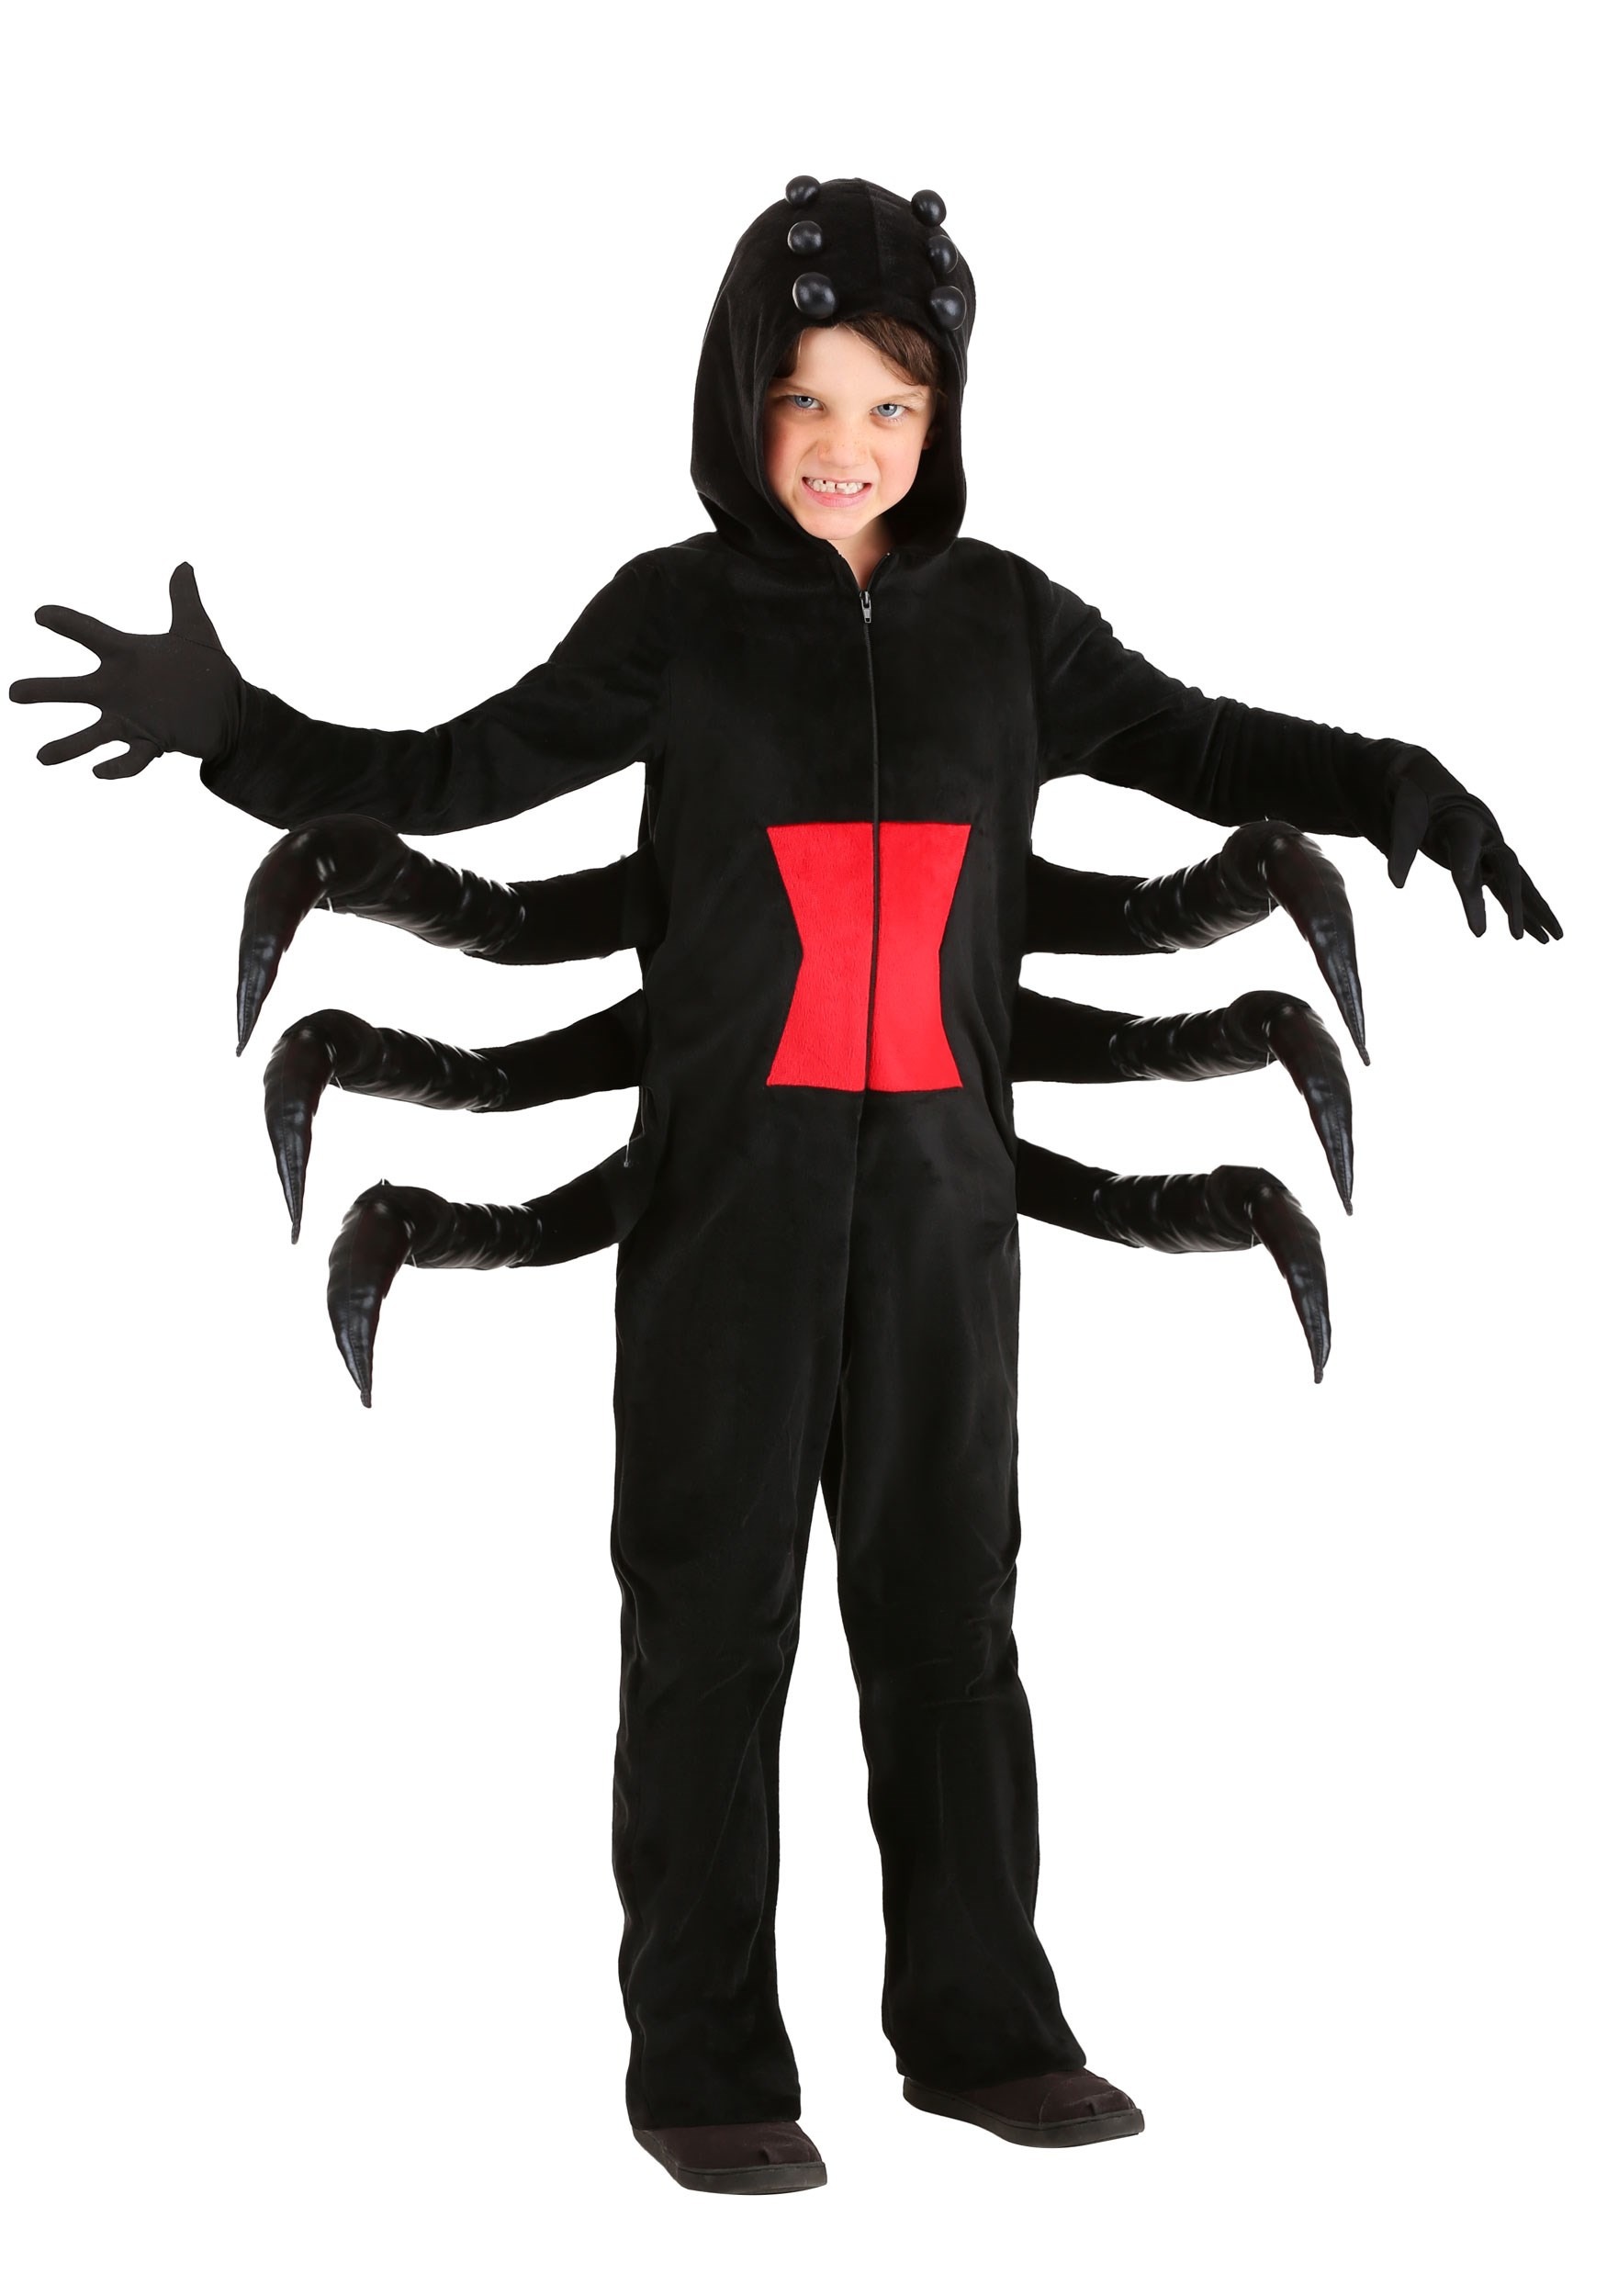 Photos - Fancy Dress Cozy FUN Costumes  Black Spider Costume for Kids | Spider Halloween Costume 